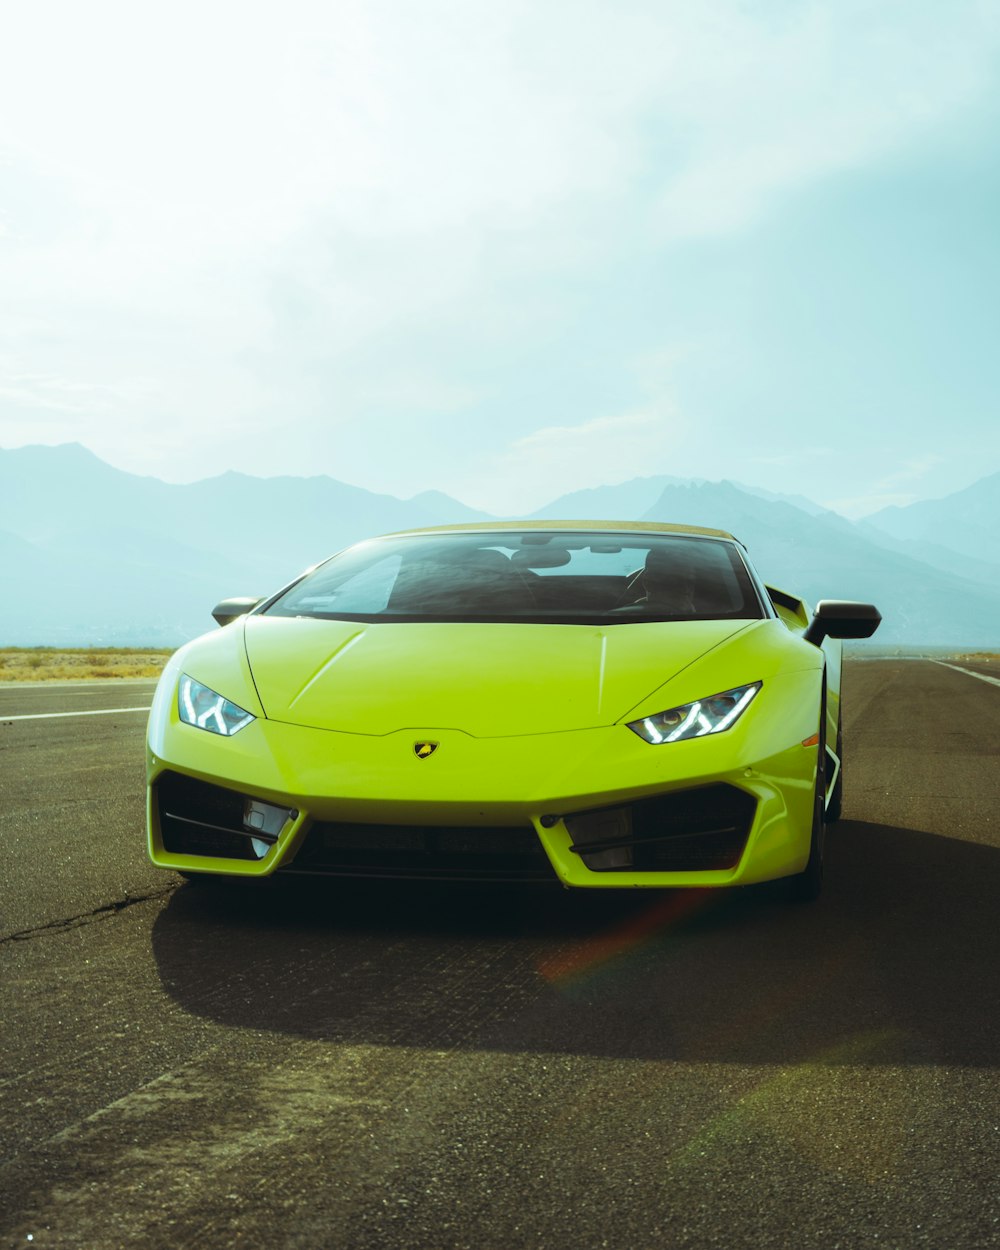 Gelber Lamborghini Aventador tagsüber unterwegs